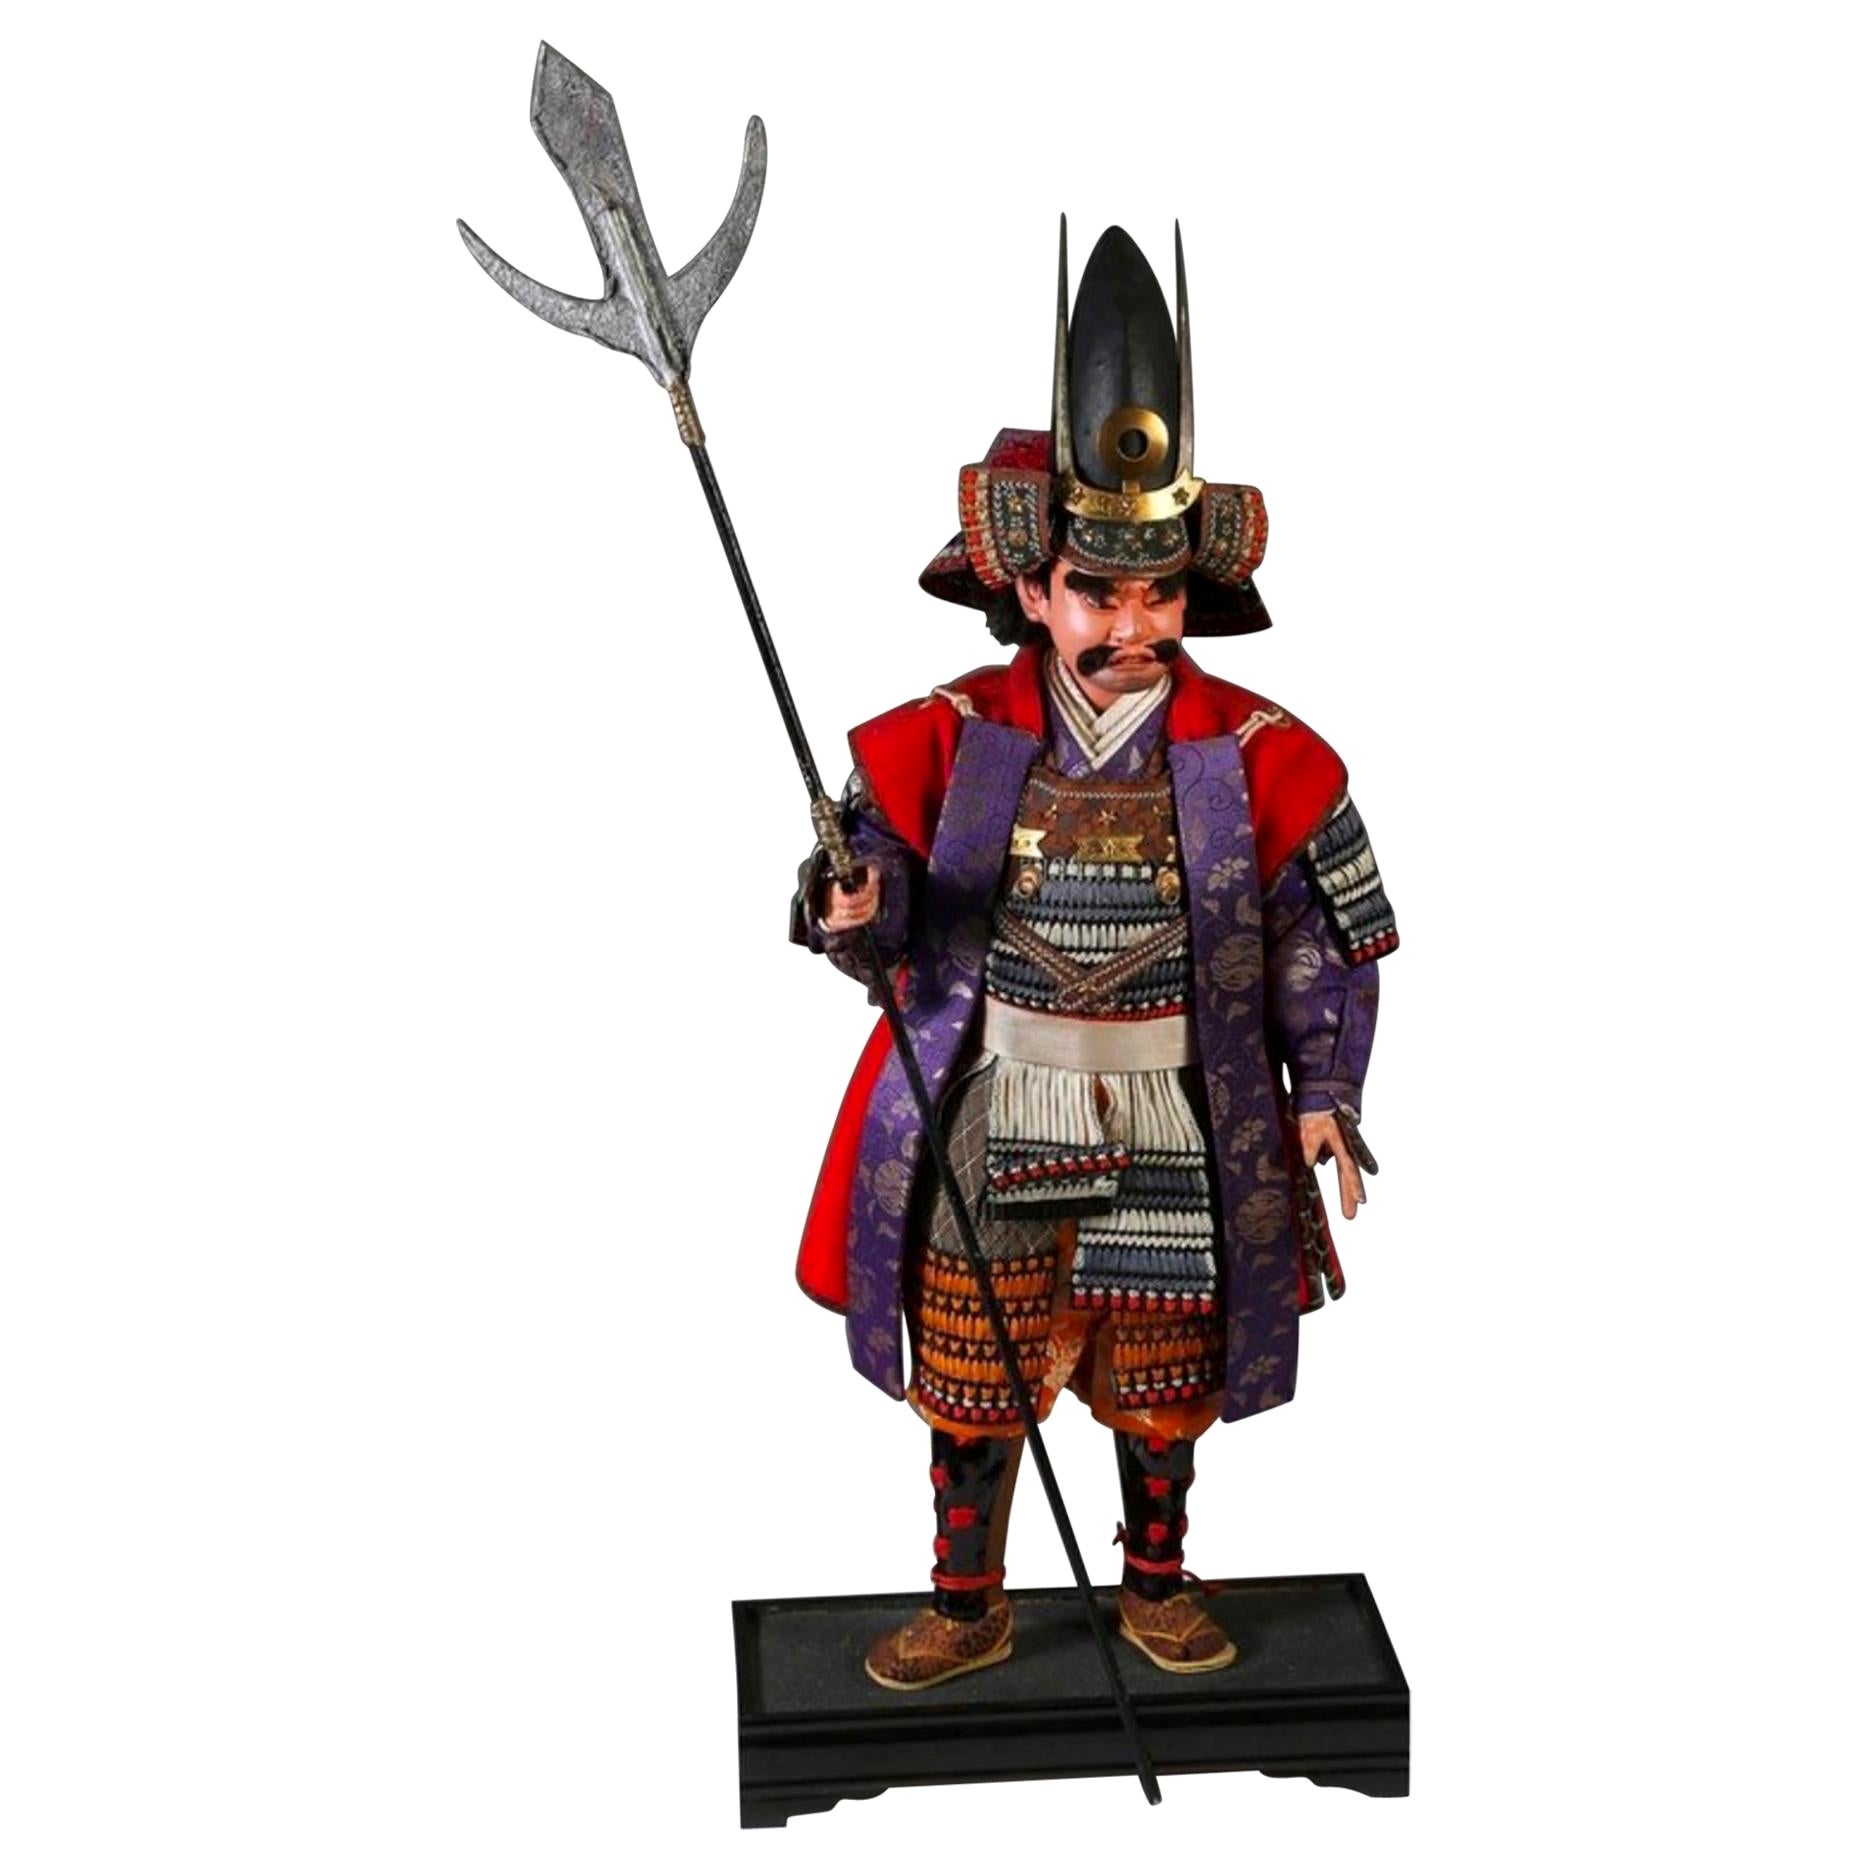 Japanese Meiji Samurai Ningyo Doll of Kato Kiyomasa in Iki Style